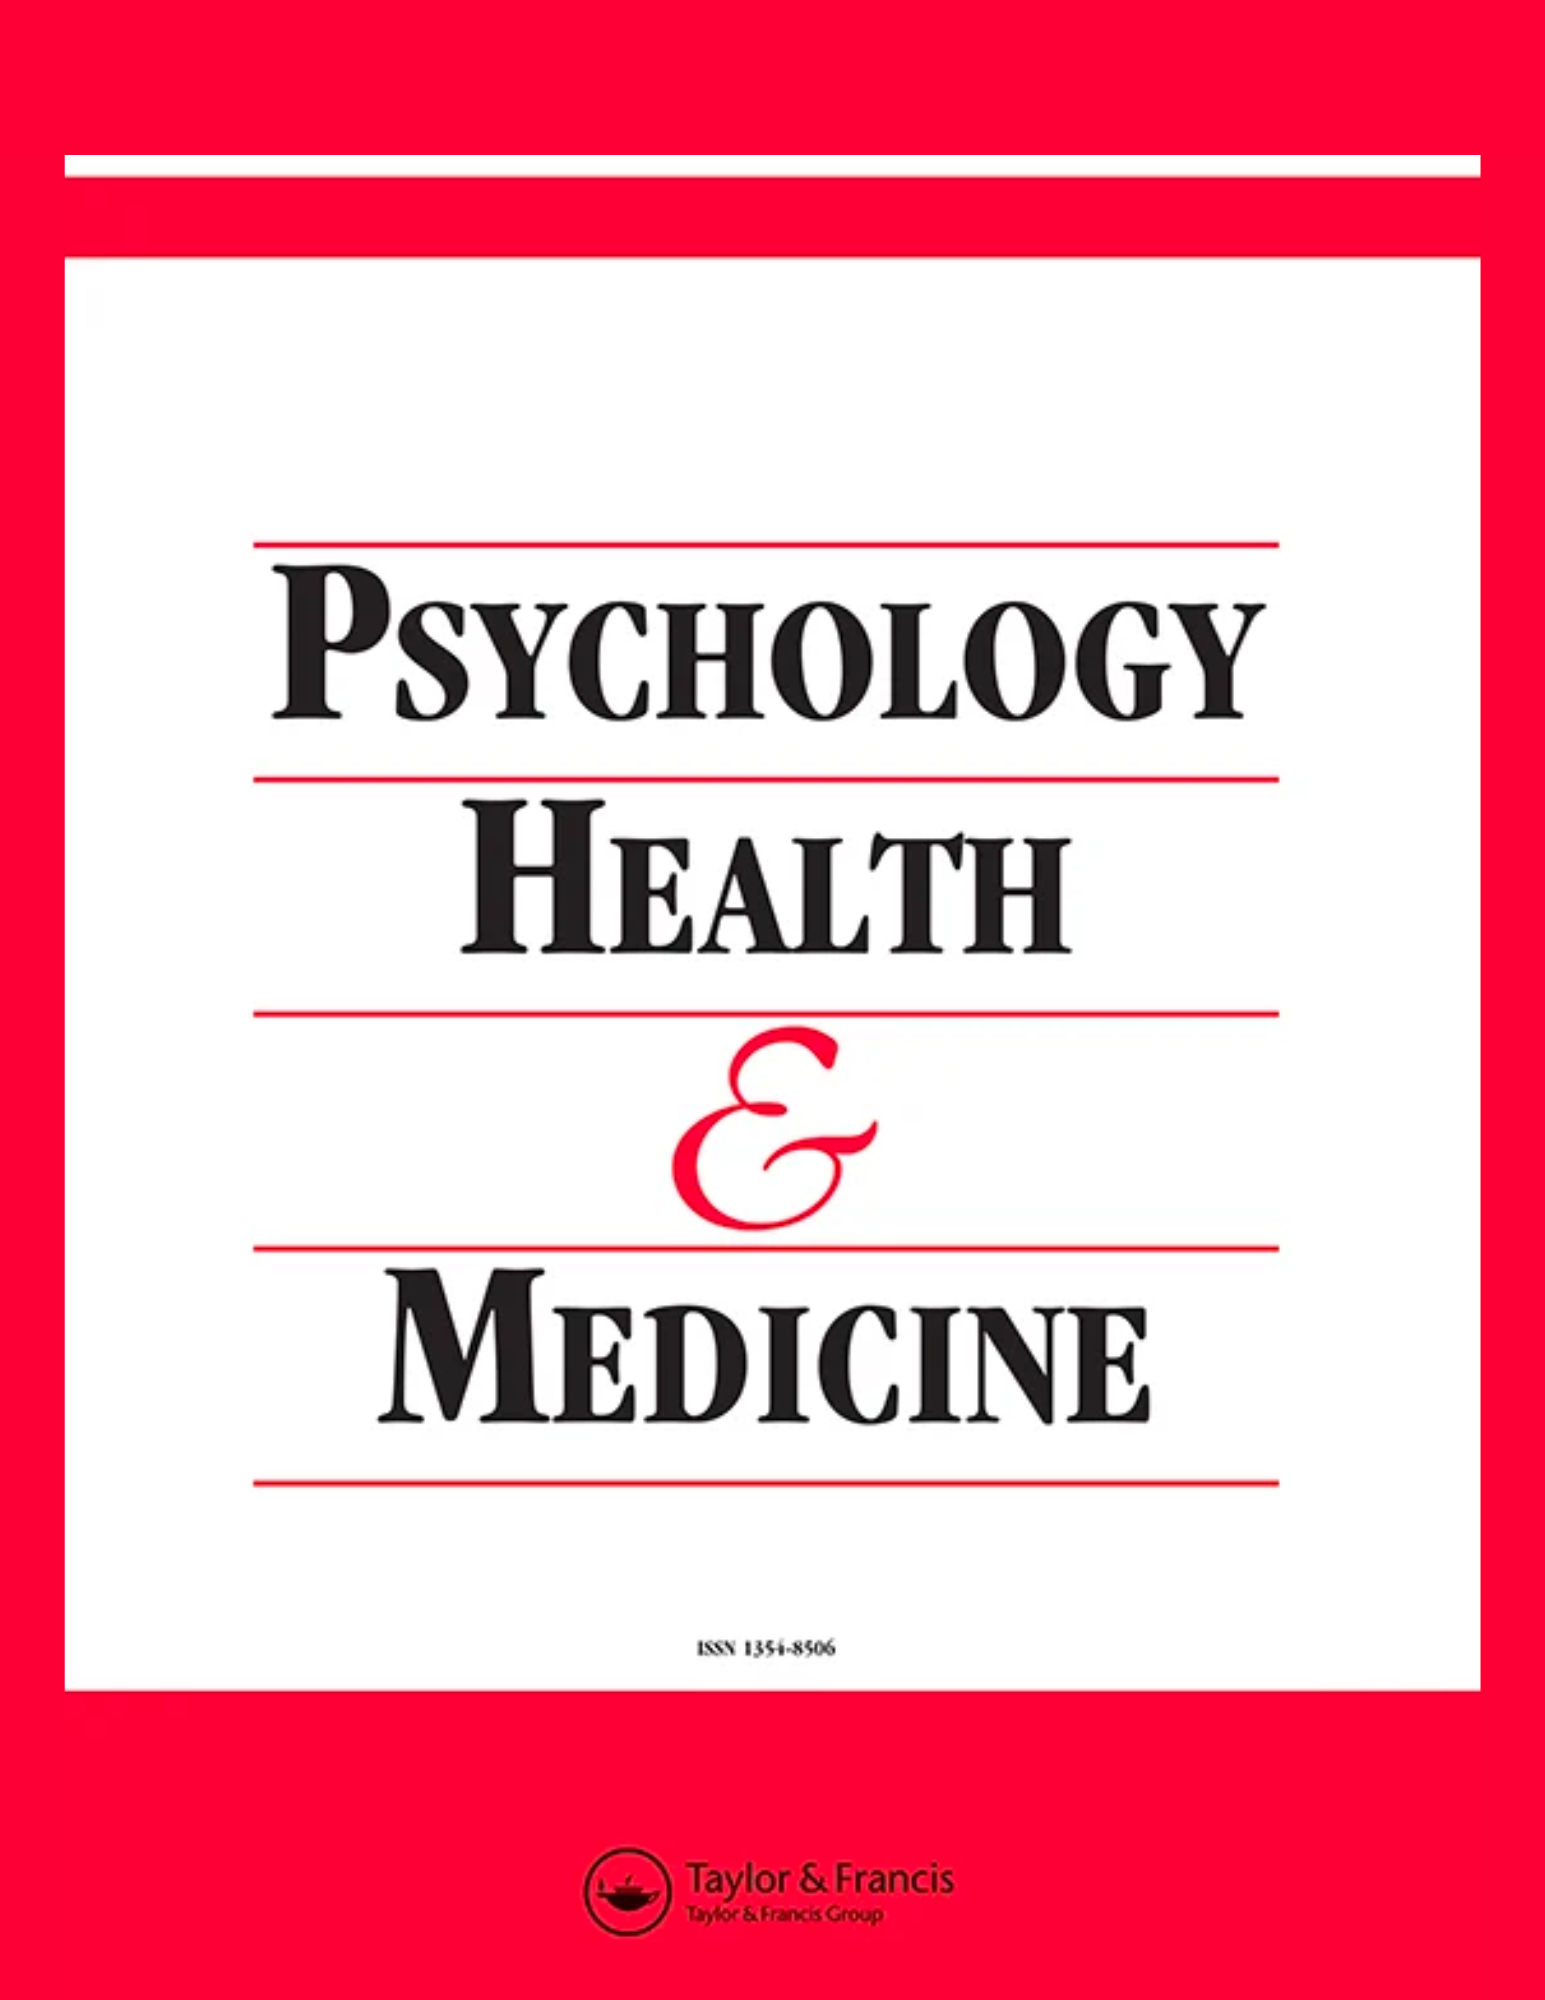 Psychology Health Medicine journal